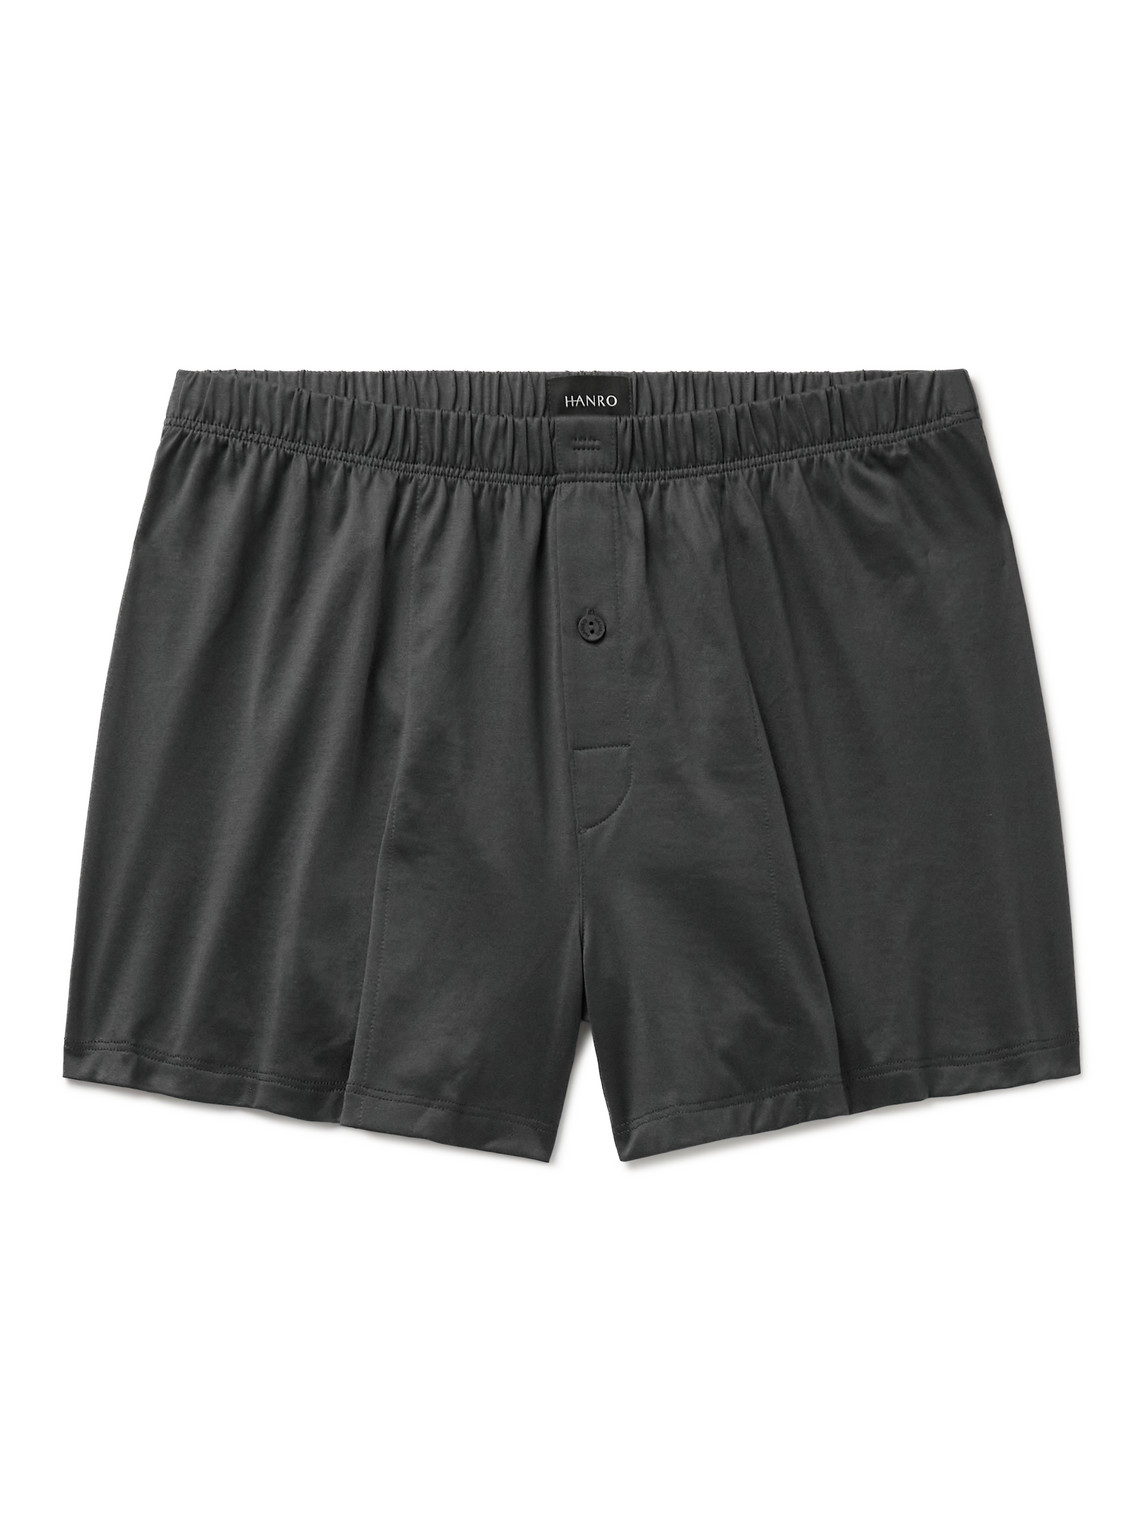 Hanro Sporty Mercerised Cotton Boxer Shorts In Gray